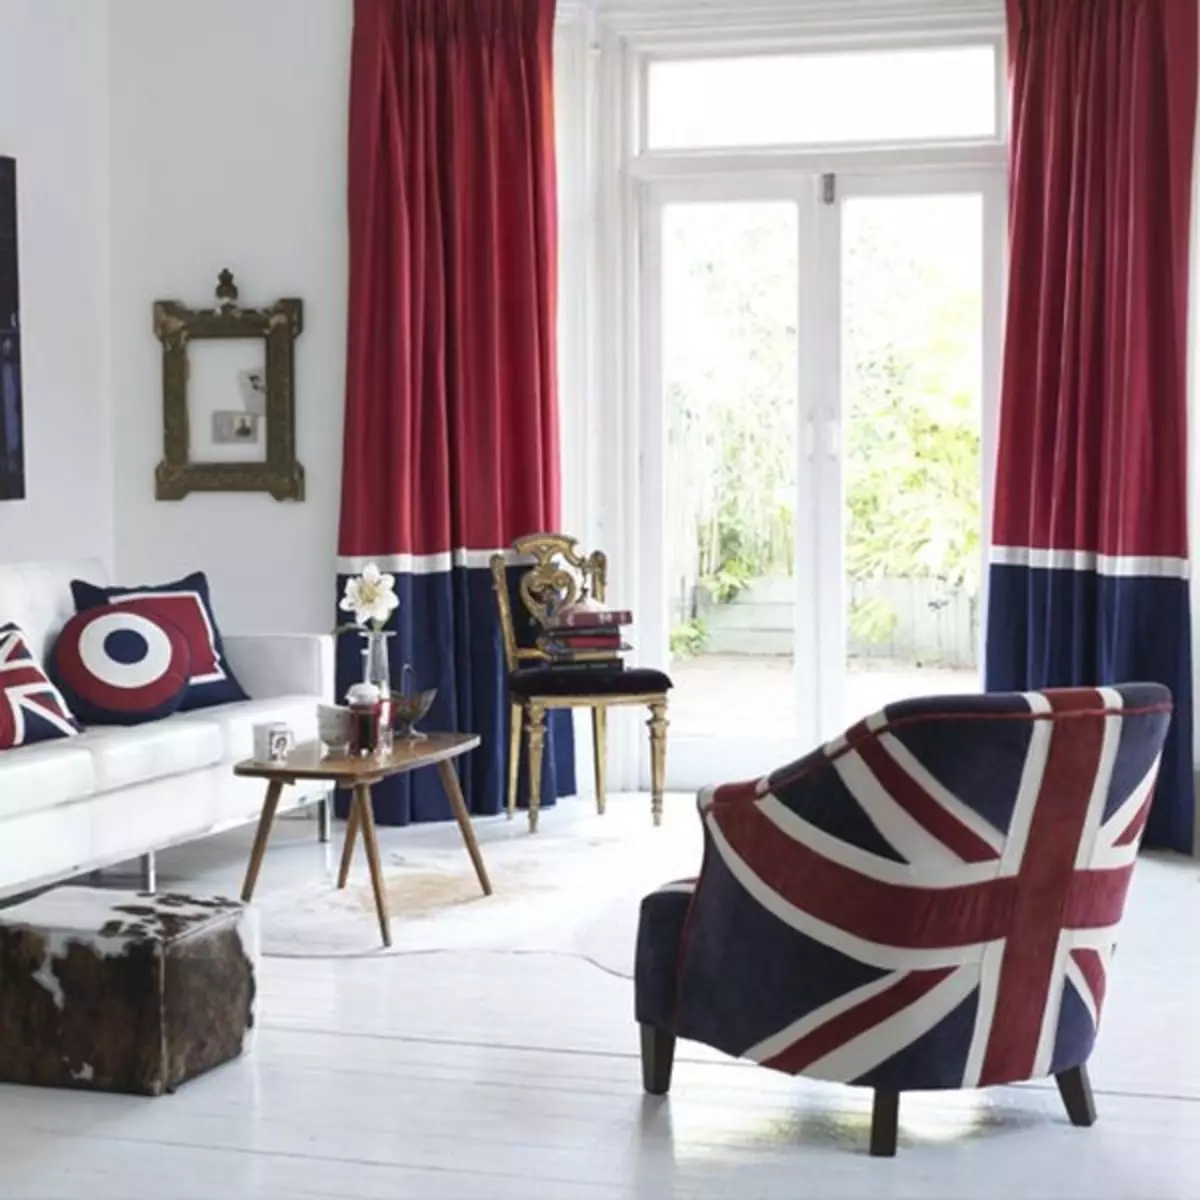 Haufi le London: British Flag in the Inteior (Union Jack - Lifoto tsa 80